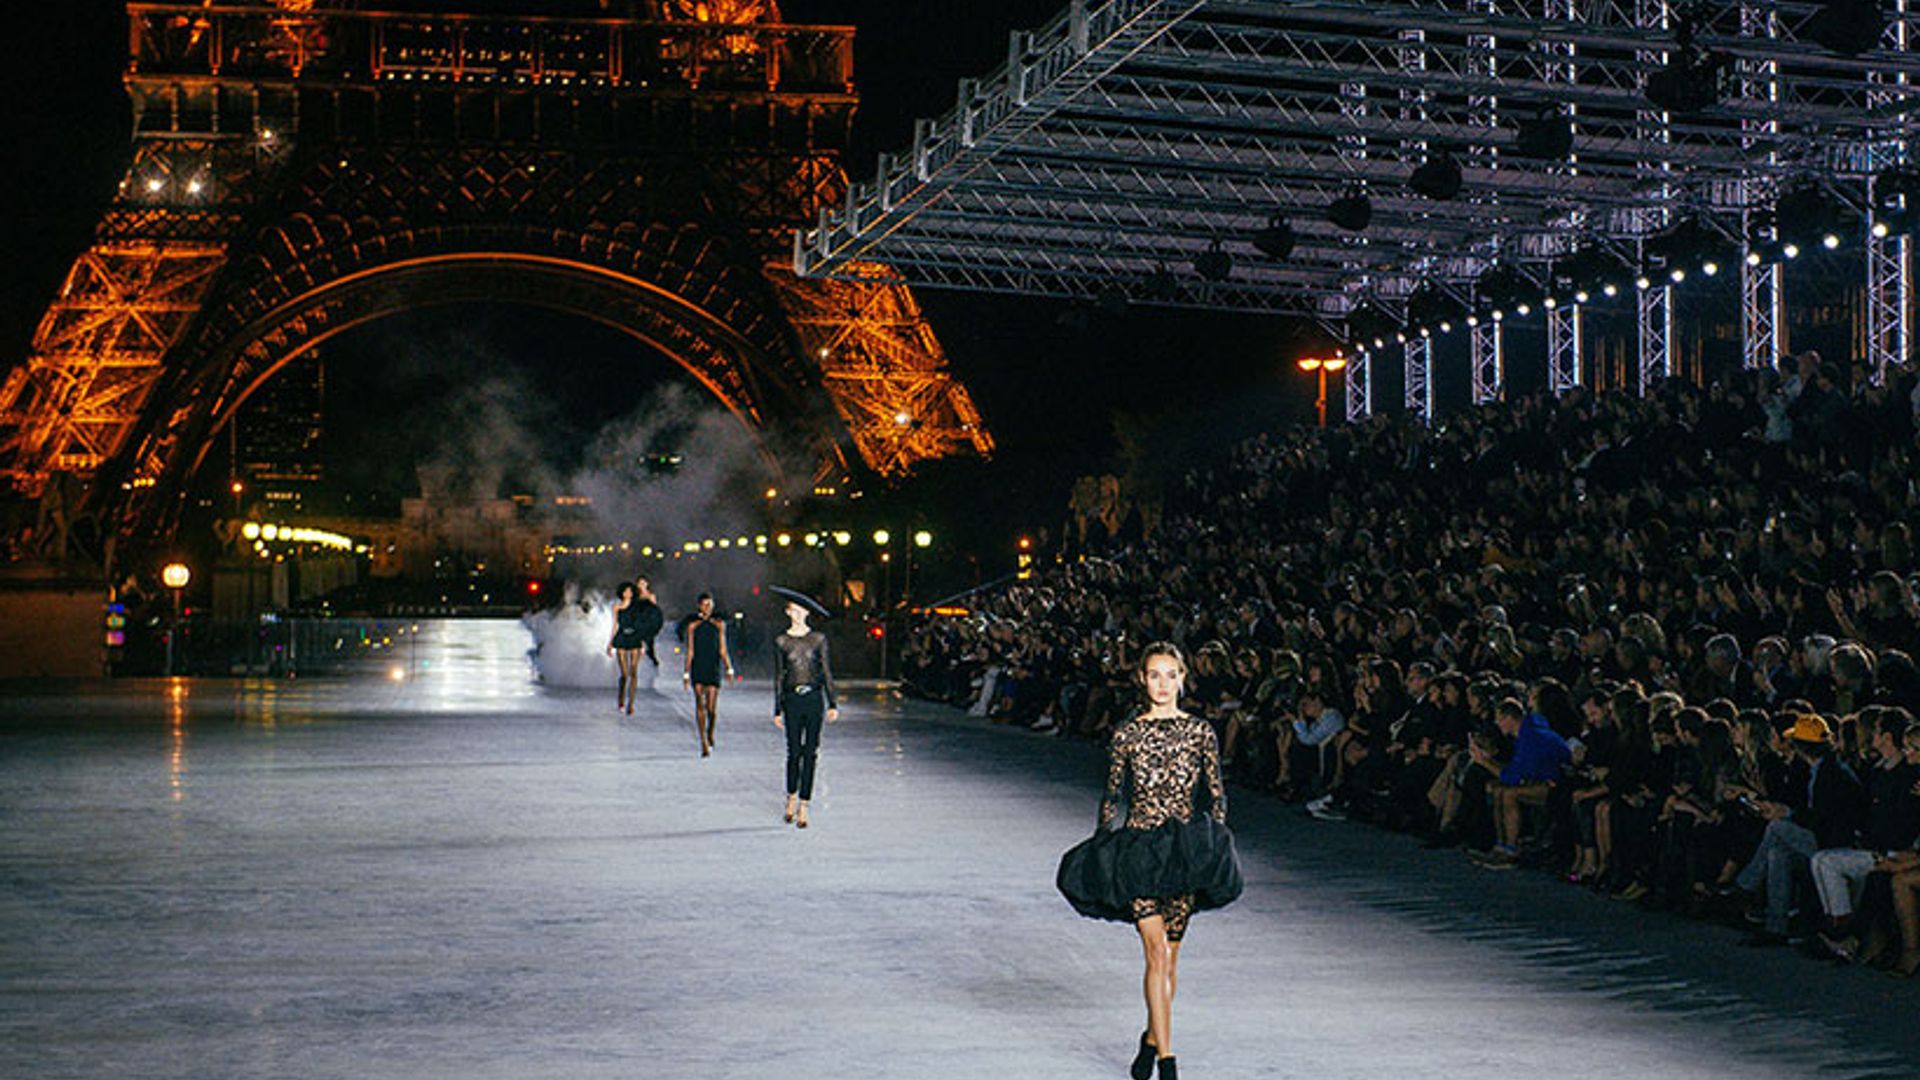 Saint Laurent stages fashion show underneath Eiffel Tower